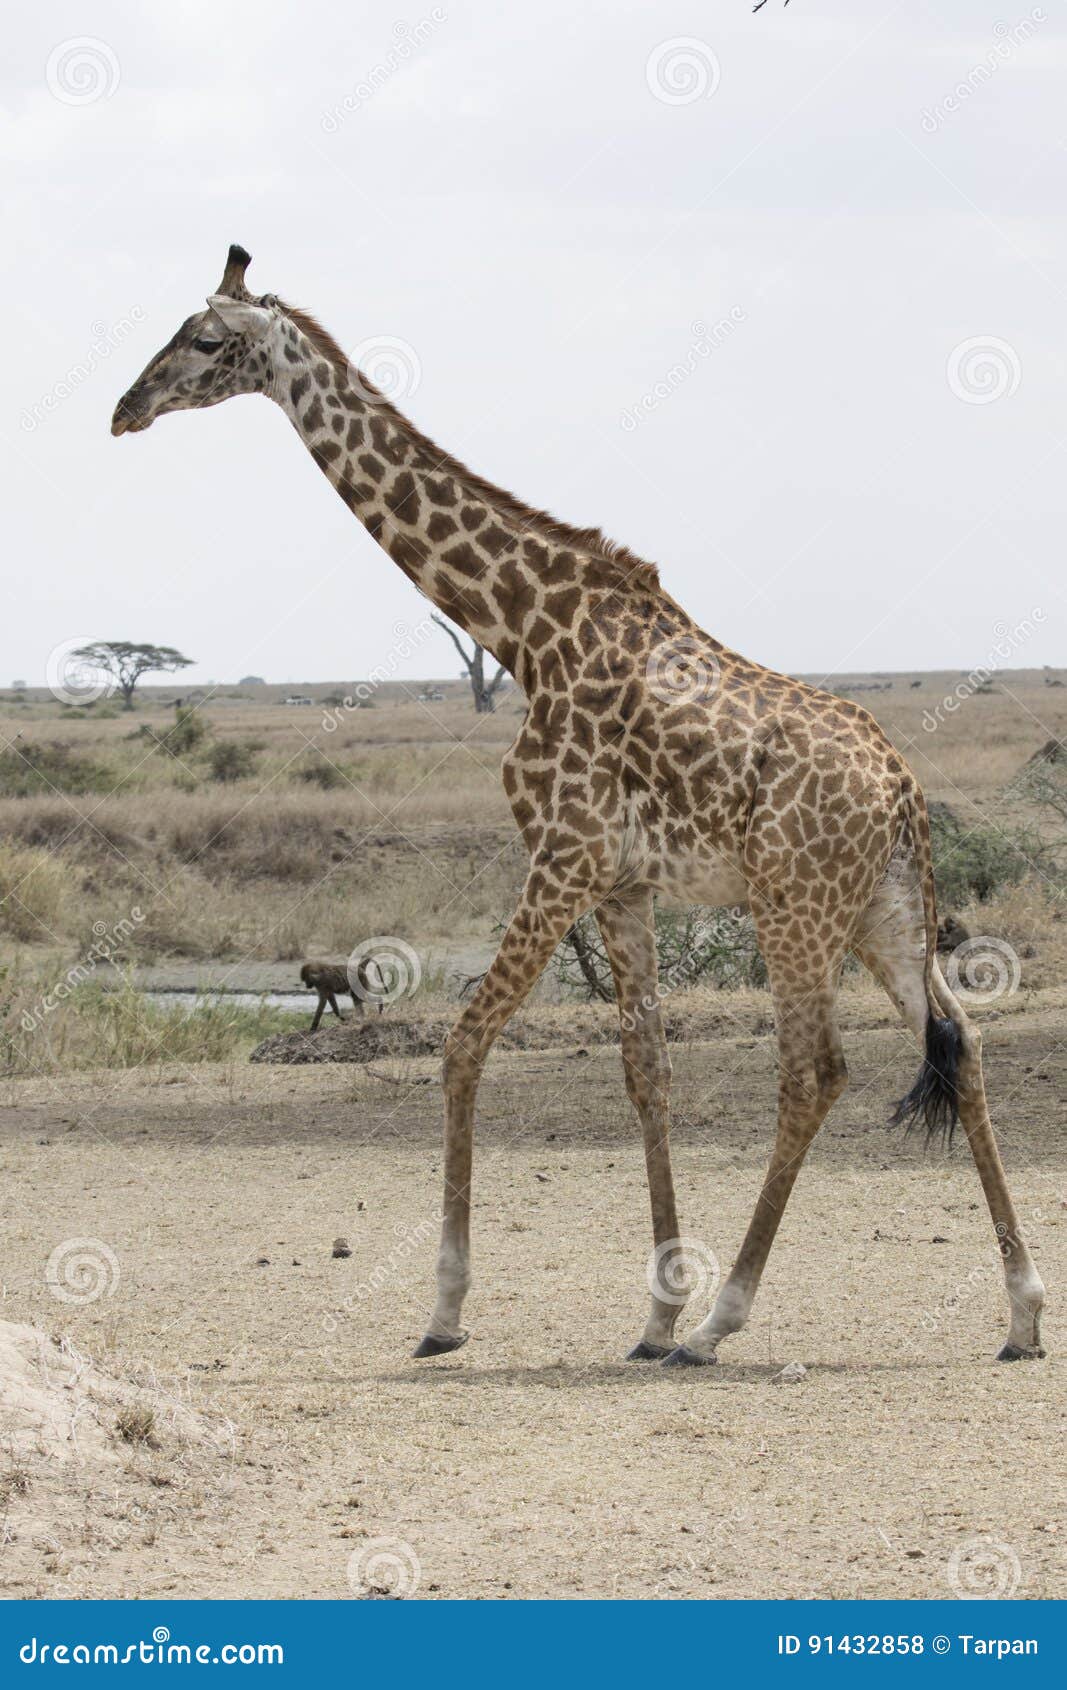 Young male giraffe walking along a dried savannah near a small lake in the dry season